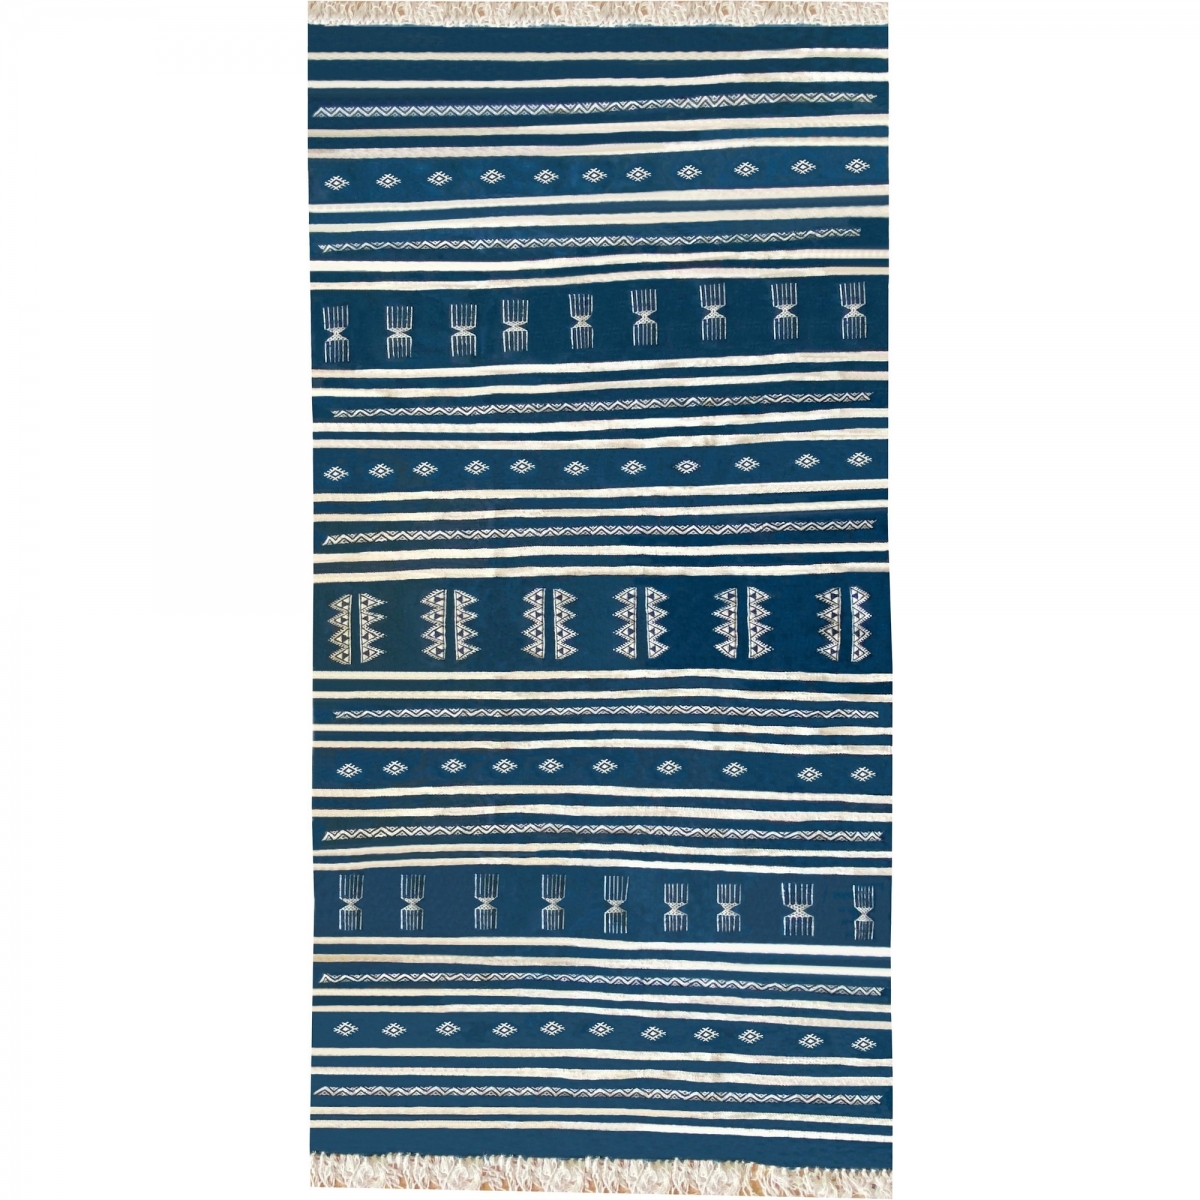 Berber tapijt Tapijt Kilim Sahline 135x256 Blauw/Wit (Handgeweven, Wol, Tunesië) Tunesisch kilimdeken, Marokkaanse stijl. Rechth